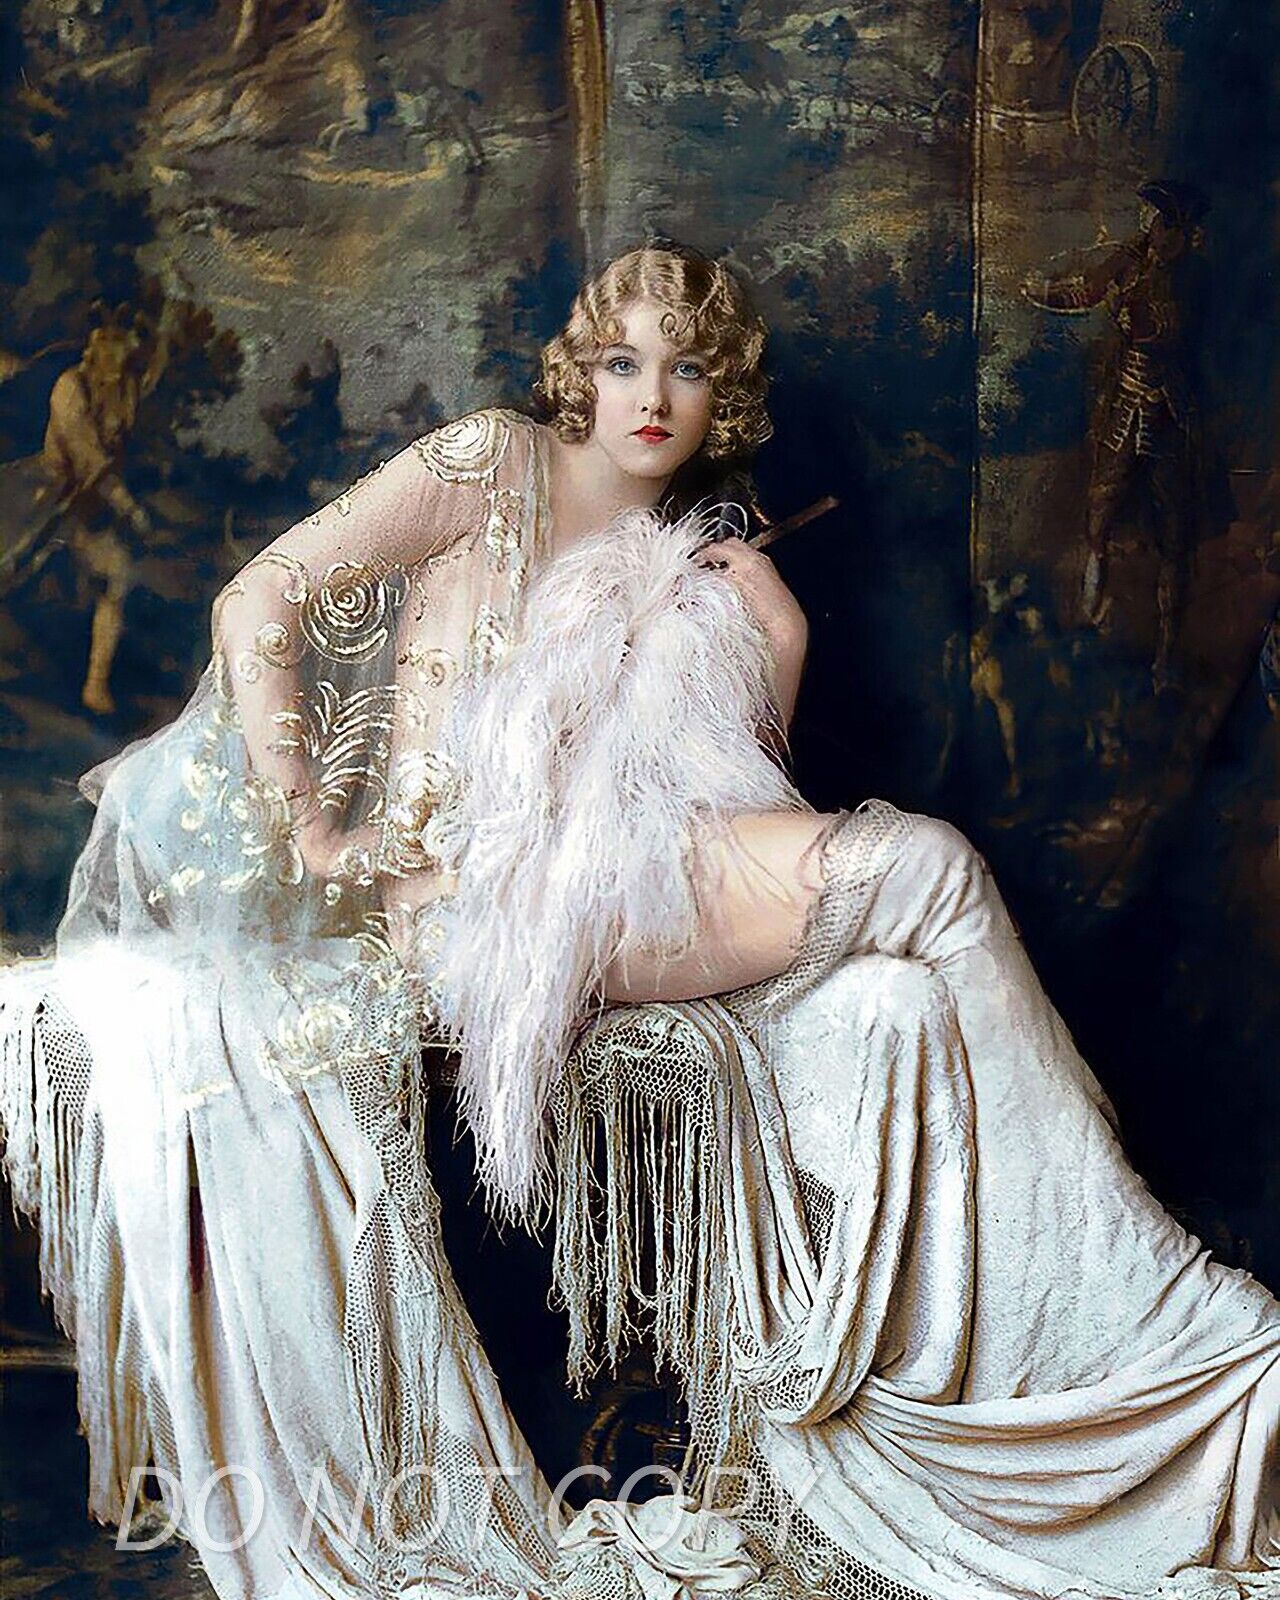  16x20 PUBLICITY PHOTO - Ziegfeld Follies Vintage 1920s glamour  - Flapper Girl